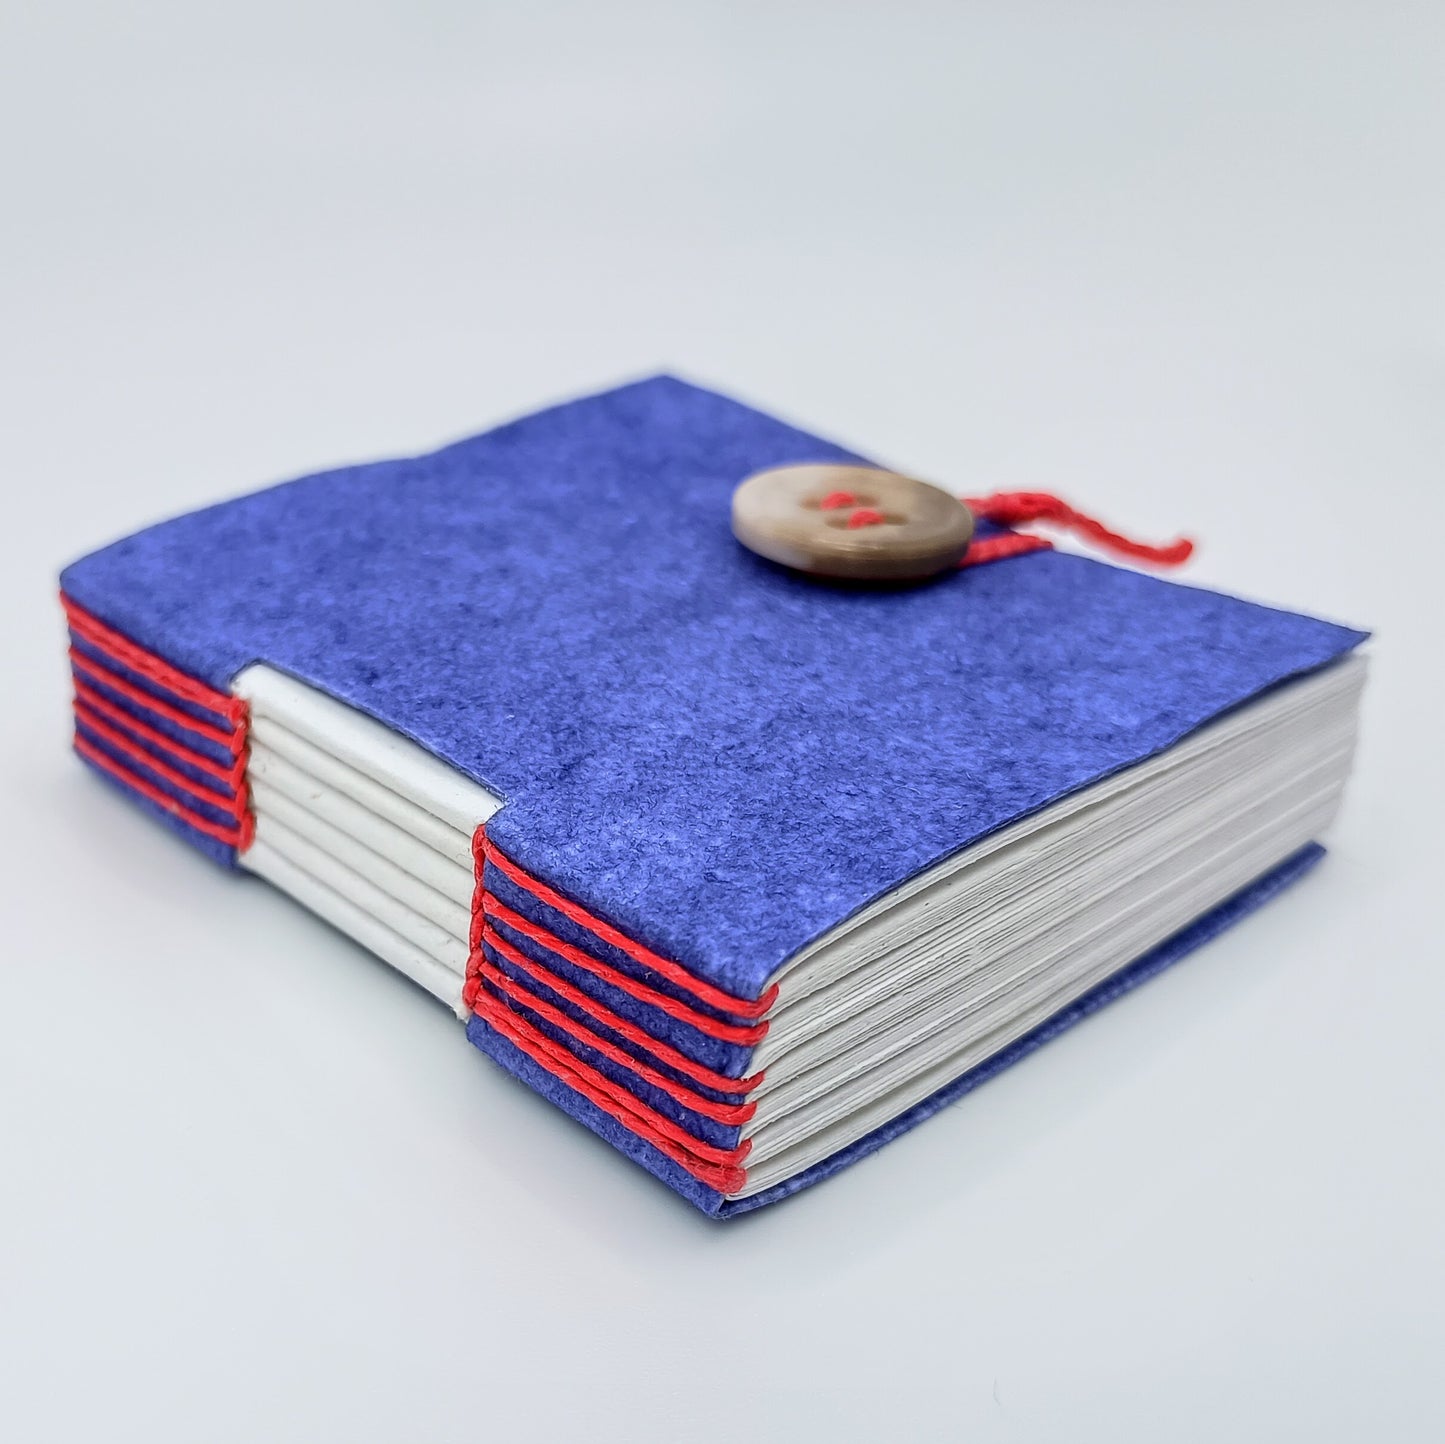 Miniature Colorful Blank Books